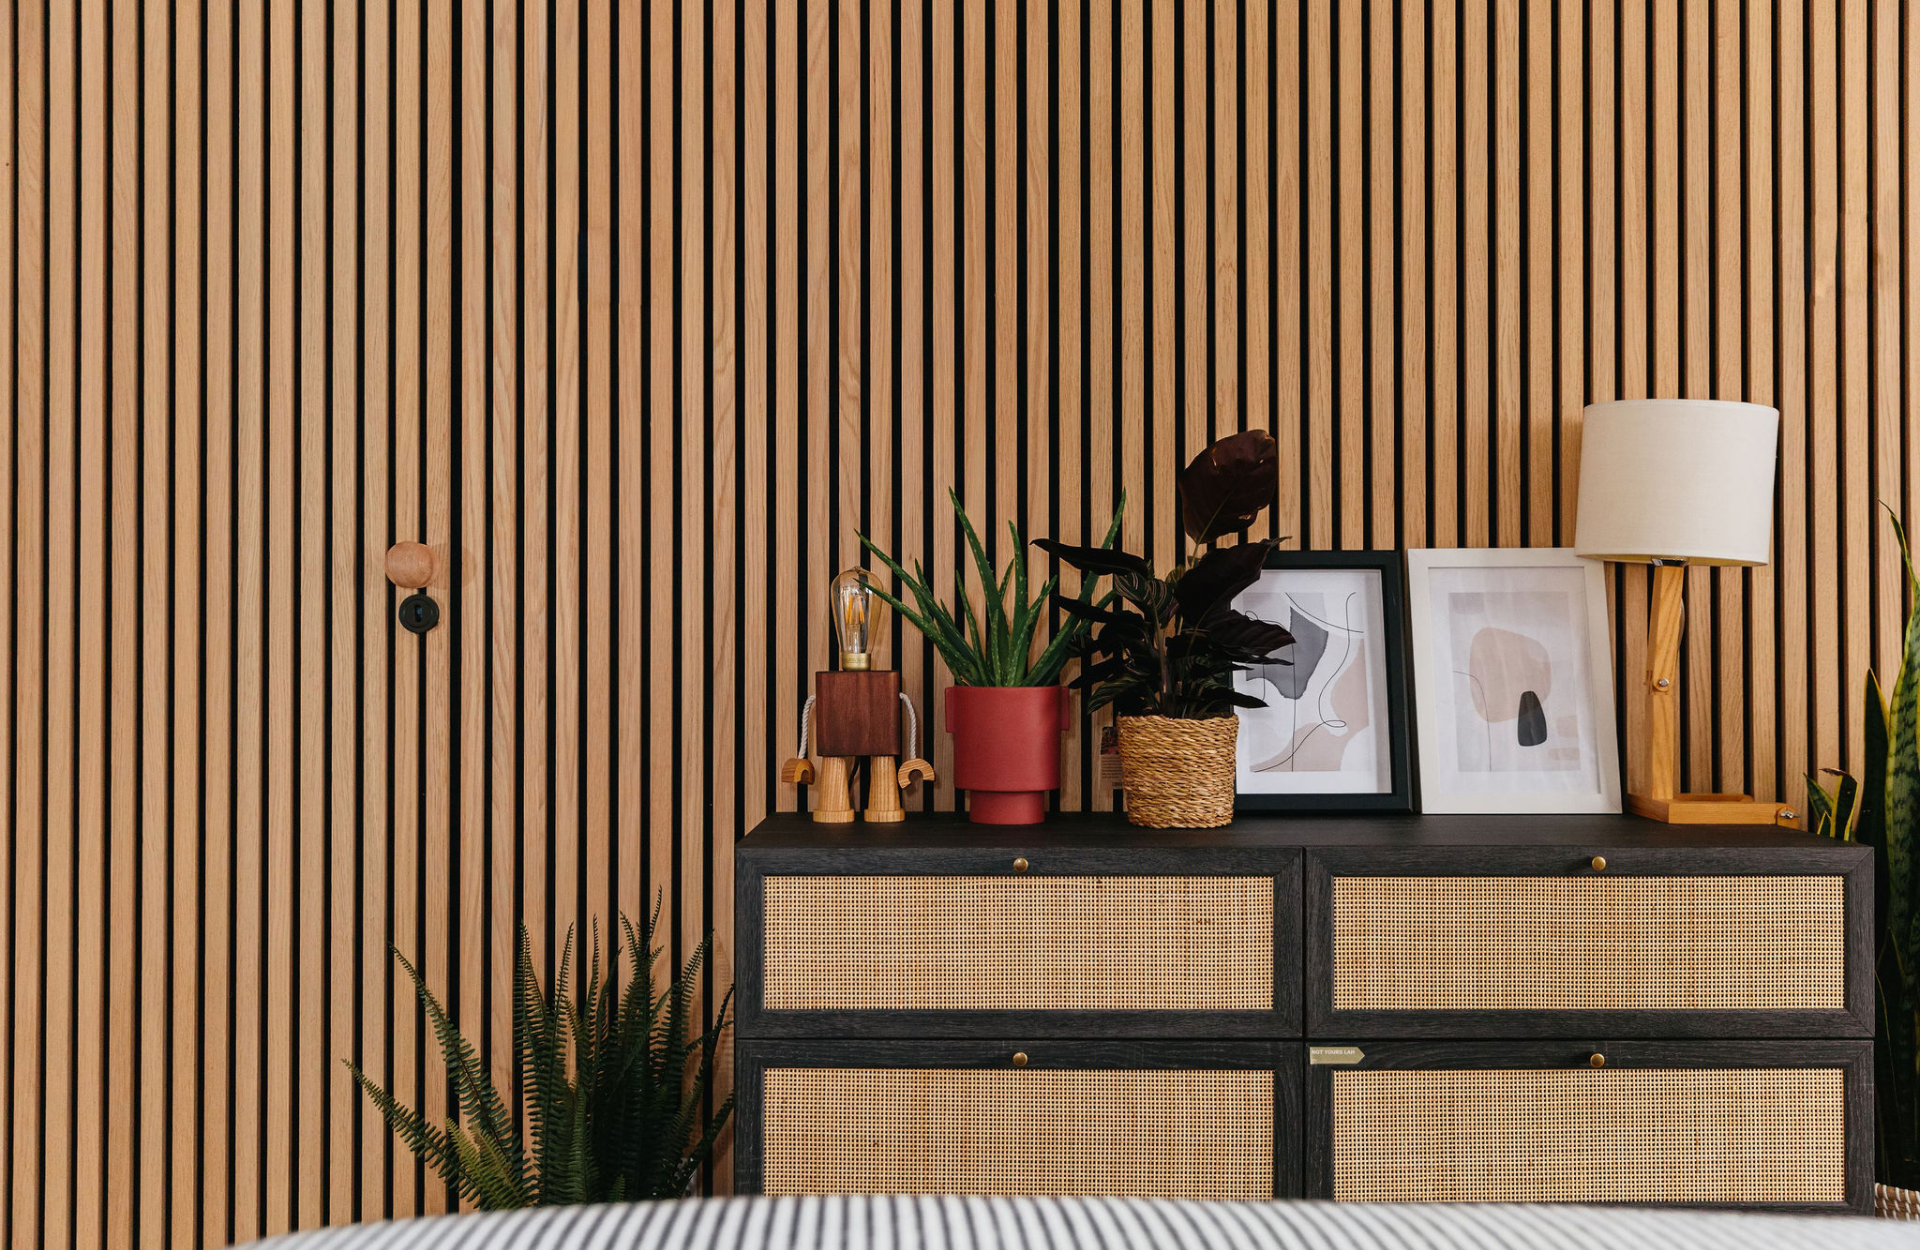 Wood panelled bedroom wall